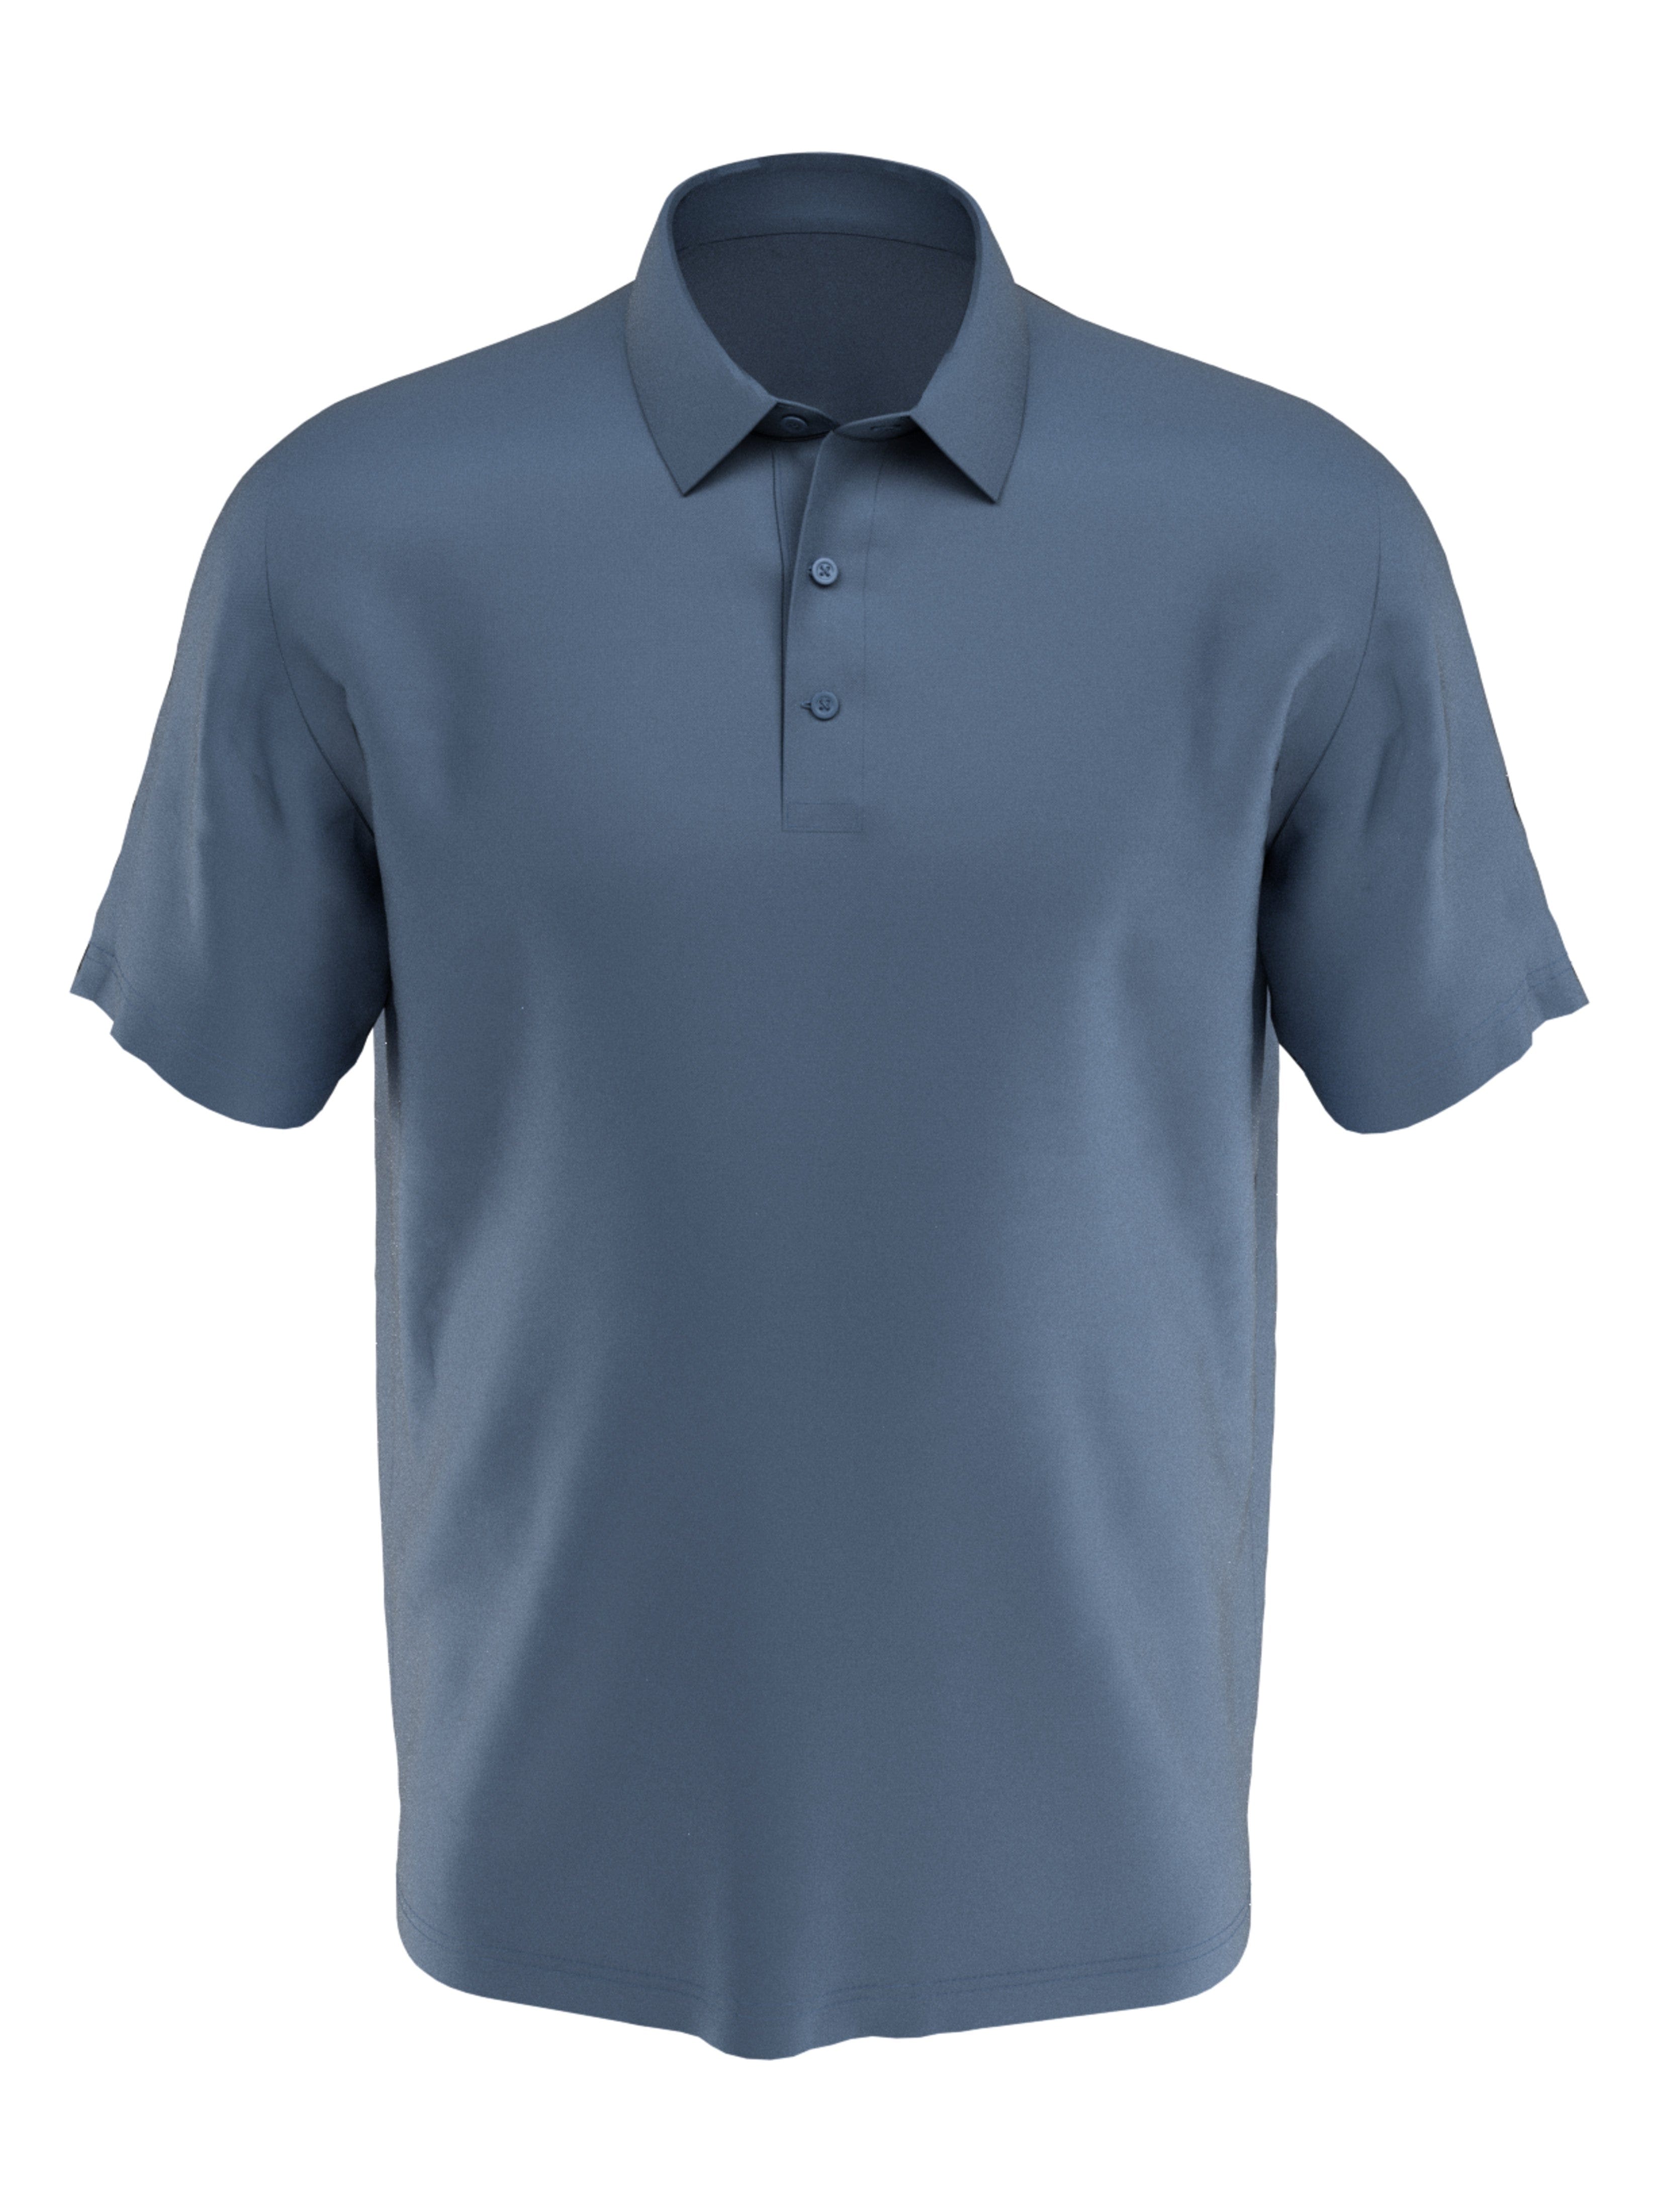 Callaway Apparel Mens Big & Tall Solid Swing Tech Golf Polo Shirt, Size 5X, Blue Horizon, Polyester/Elastane | Golf Apparel Shop